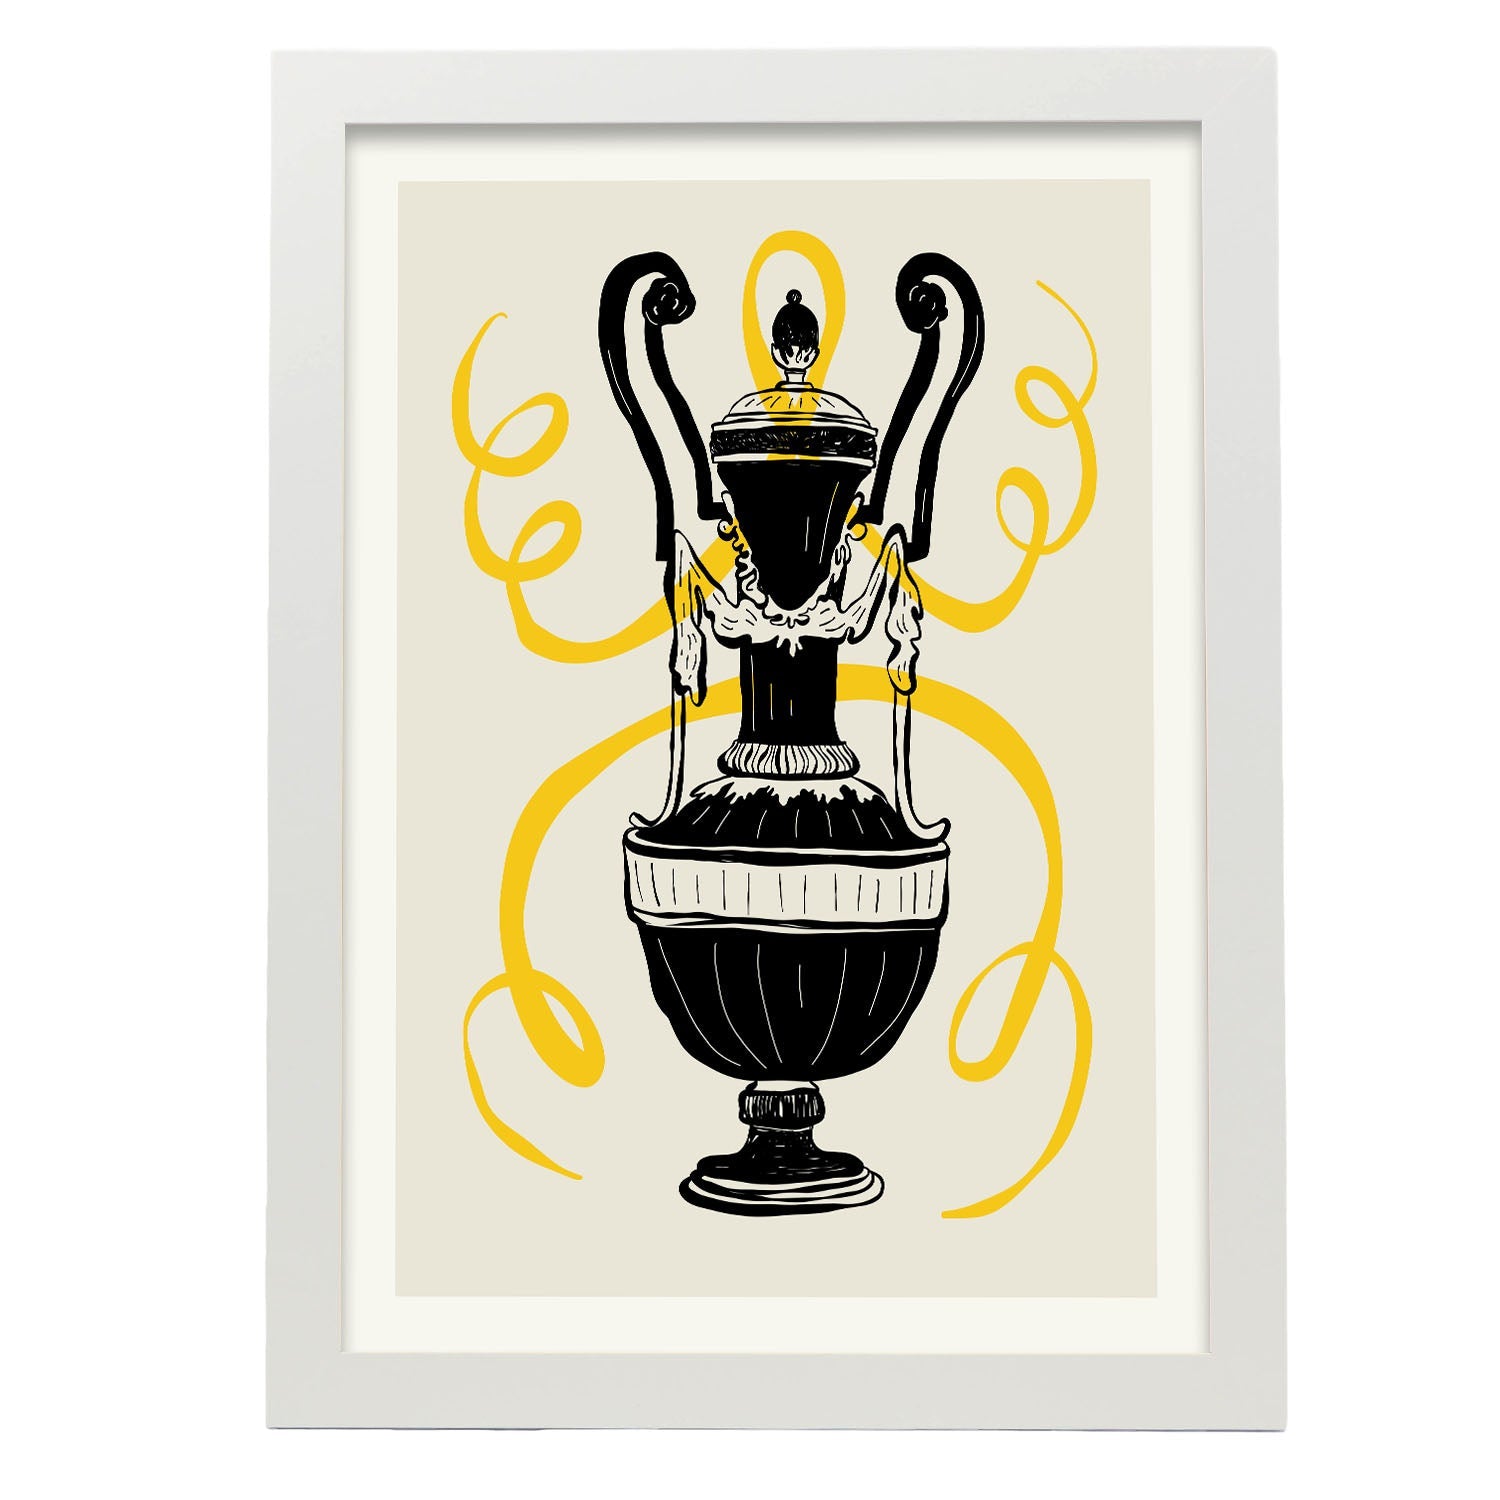 Acient Greek Vase-Artwork-Nacnic-A3-Marco Blanco-Nacnic Estudio SL